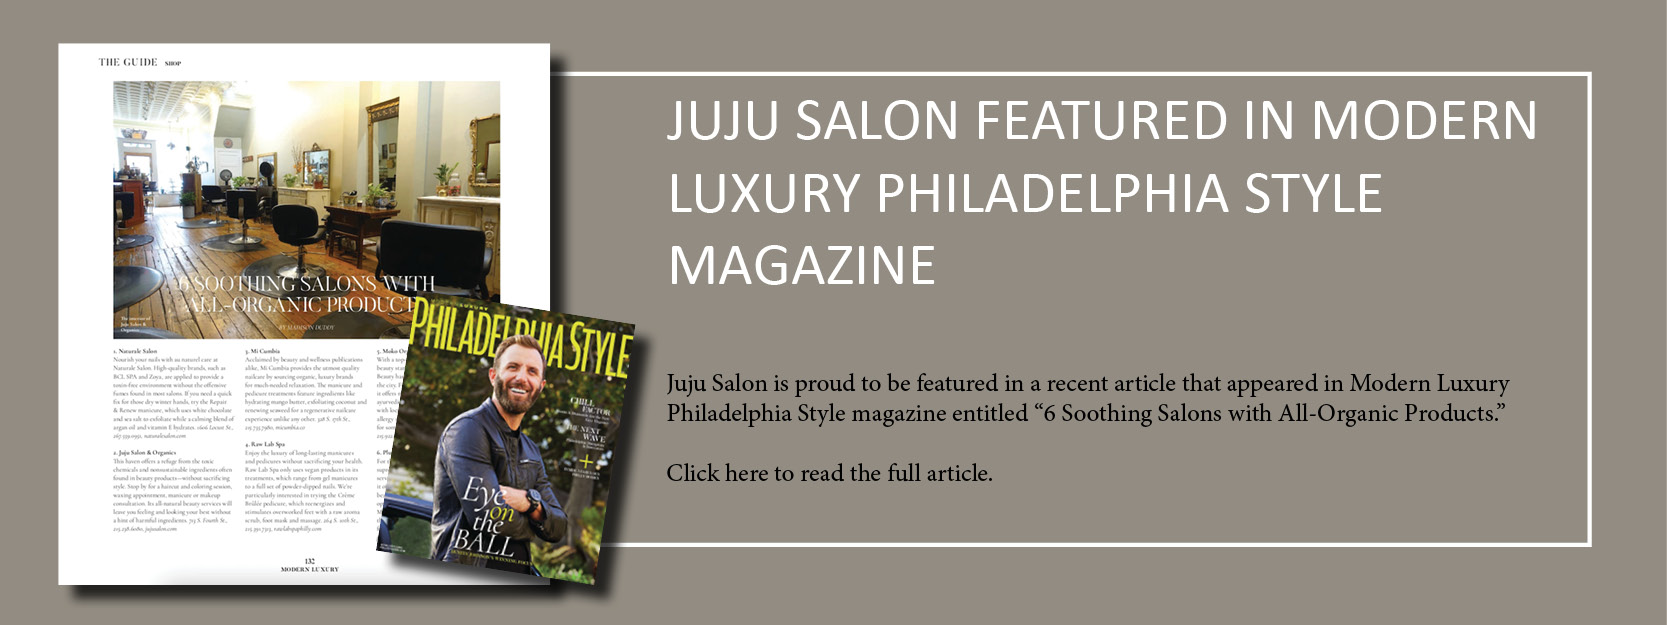 juju salon featured in Phildelphia Style magazine